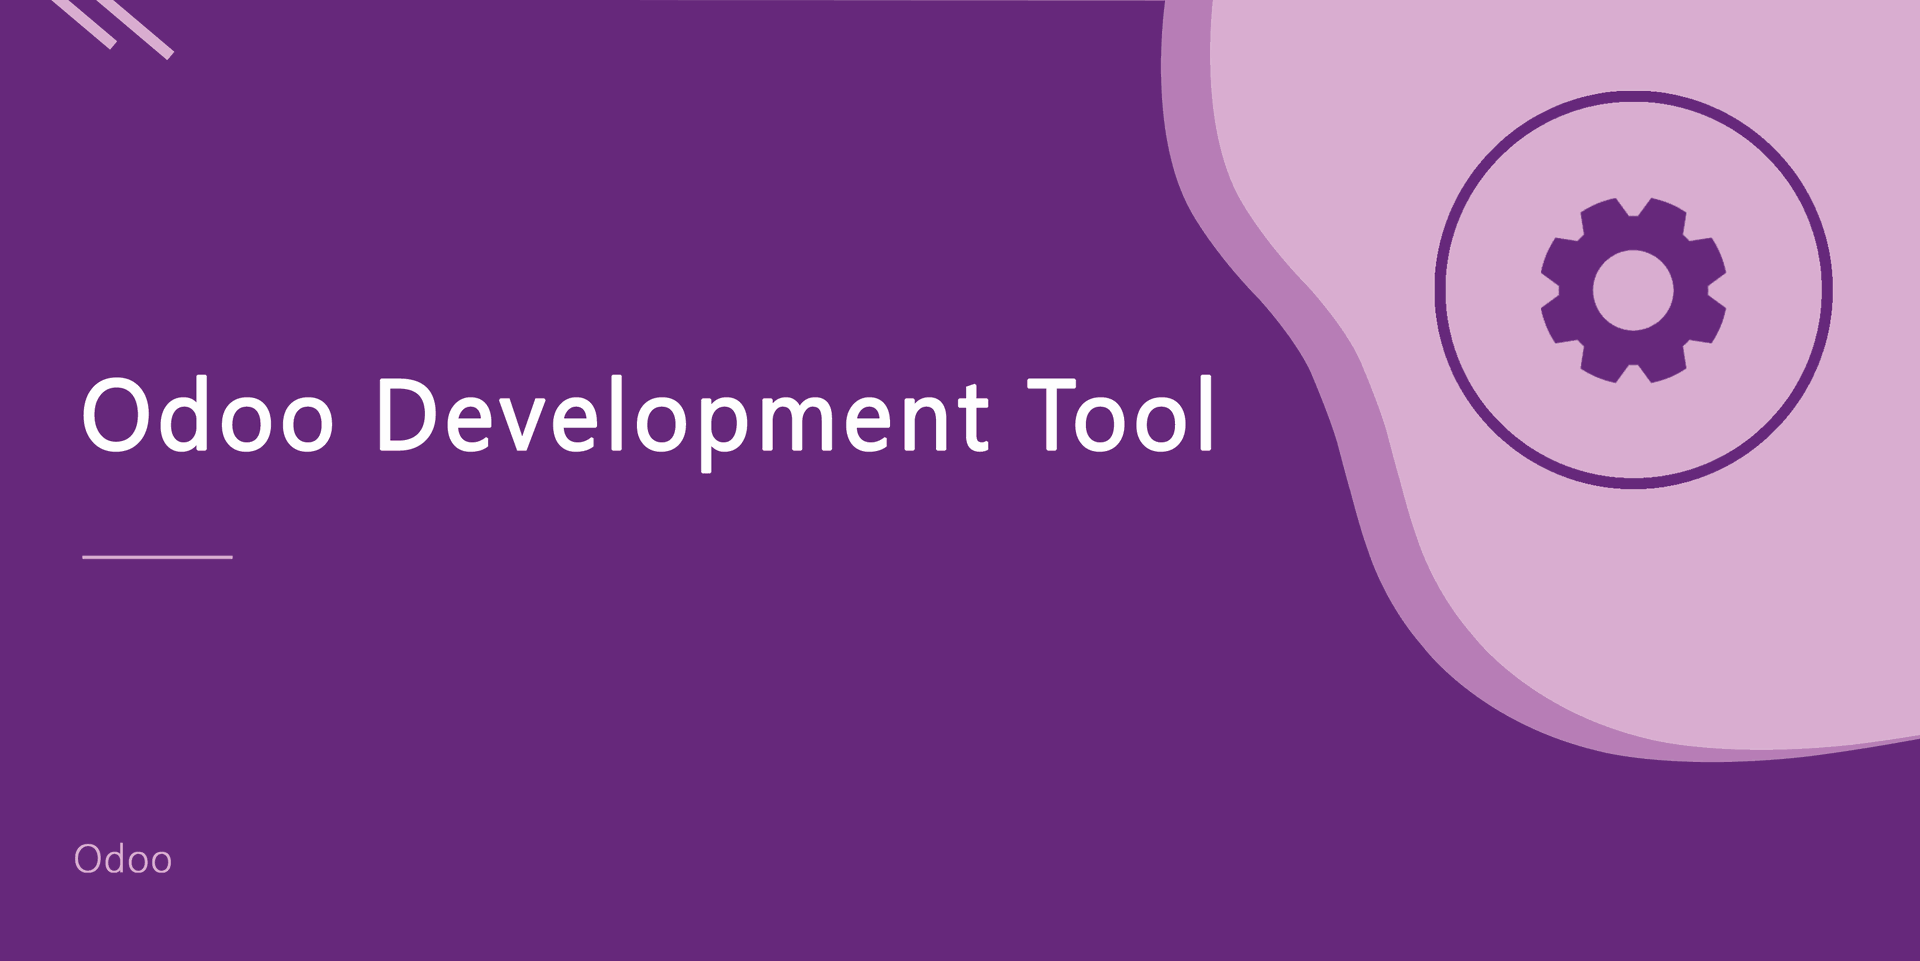 Odoo Development Tool